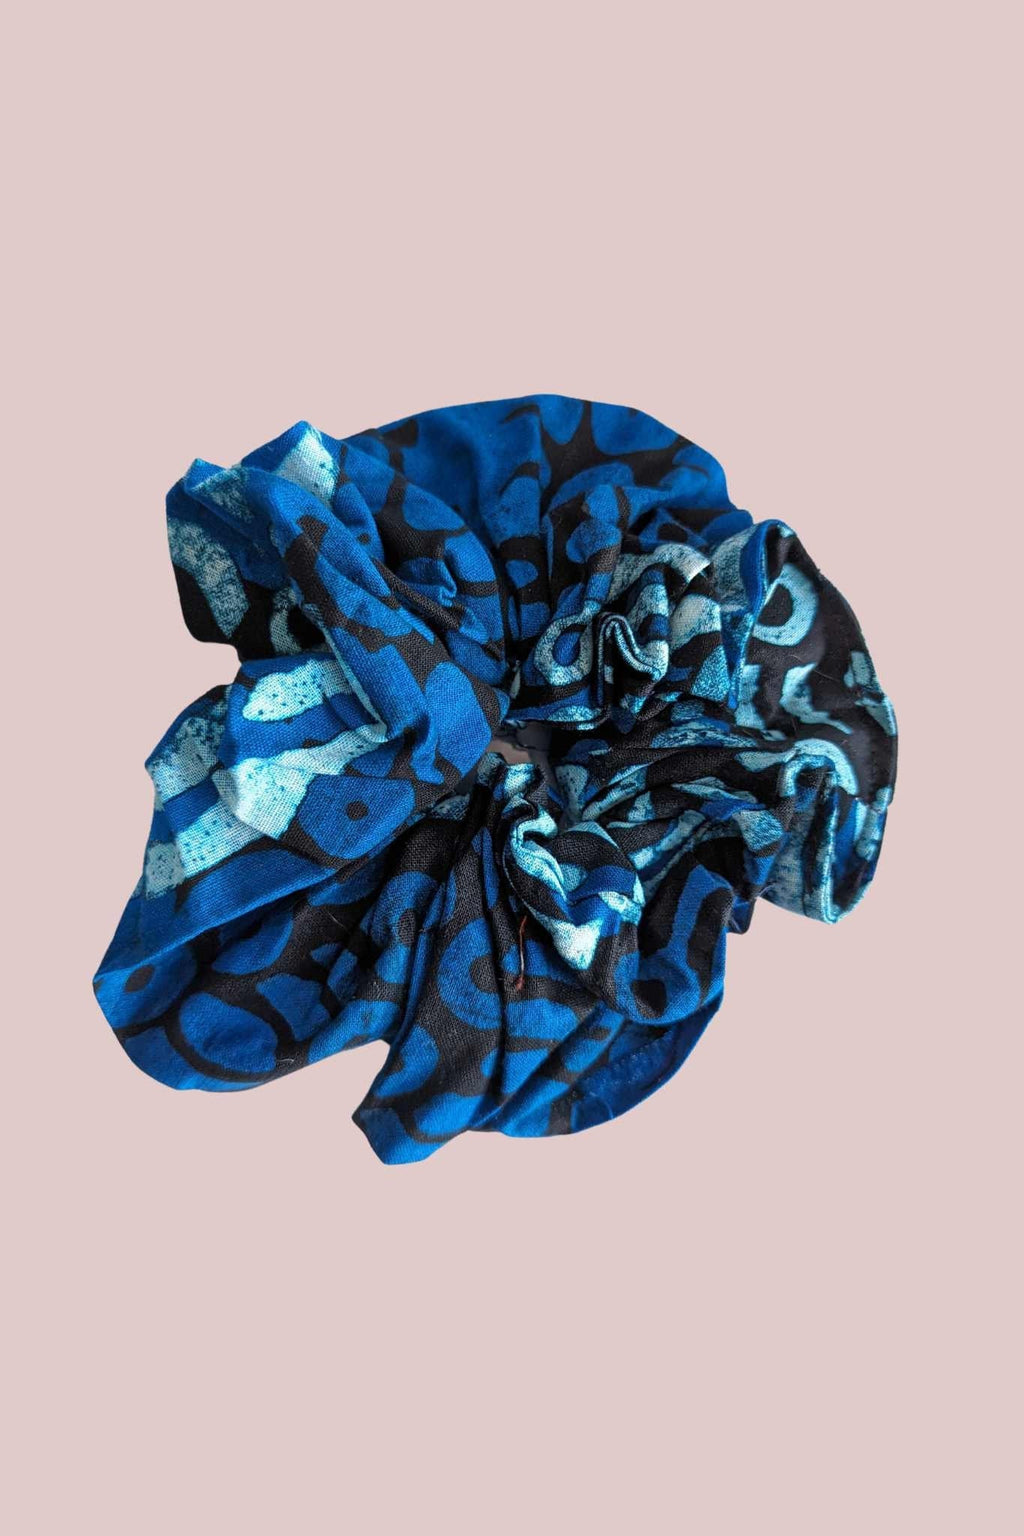 Blue Batik Scrunchie, African Hair Accessories, Colourful Scrunchie, Hair Scrunchie, Colourful Hair band, Blue Hair Tie, Large Scrunchie